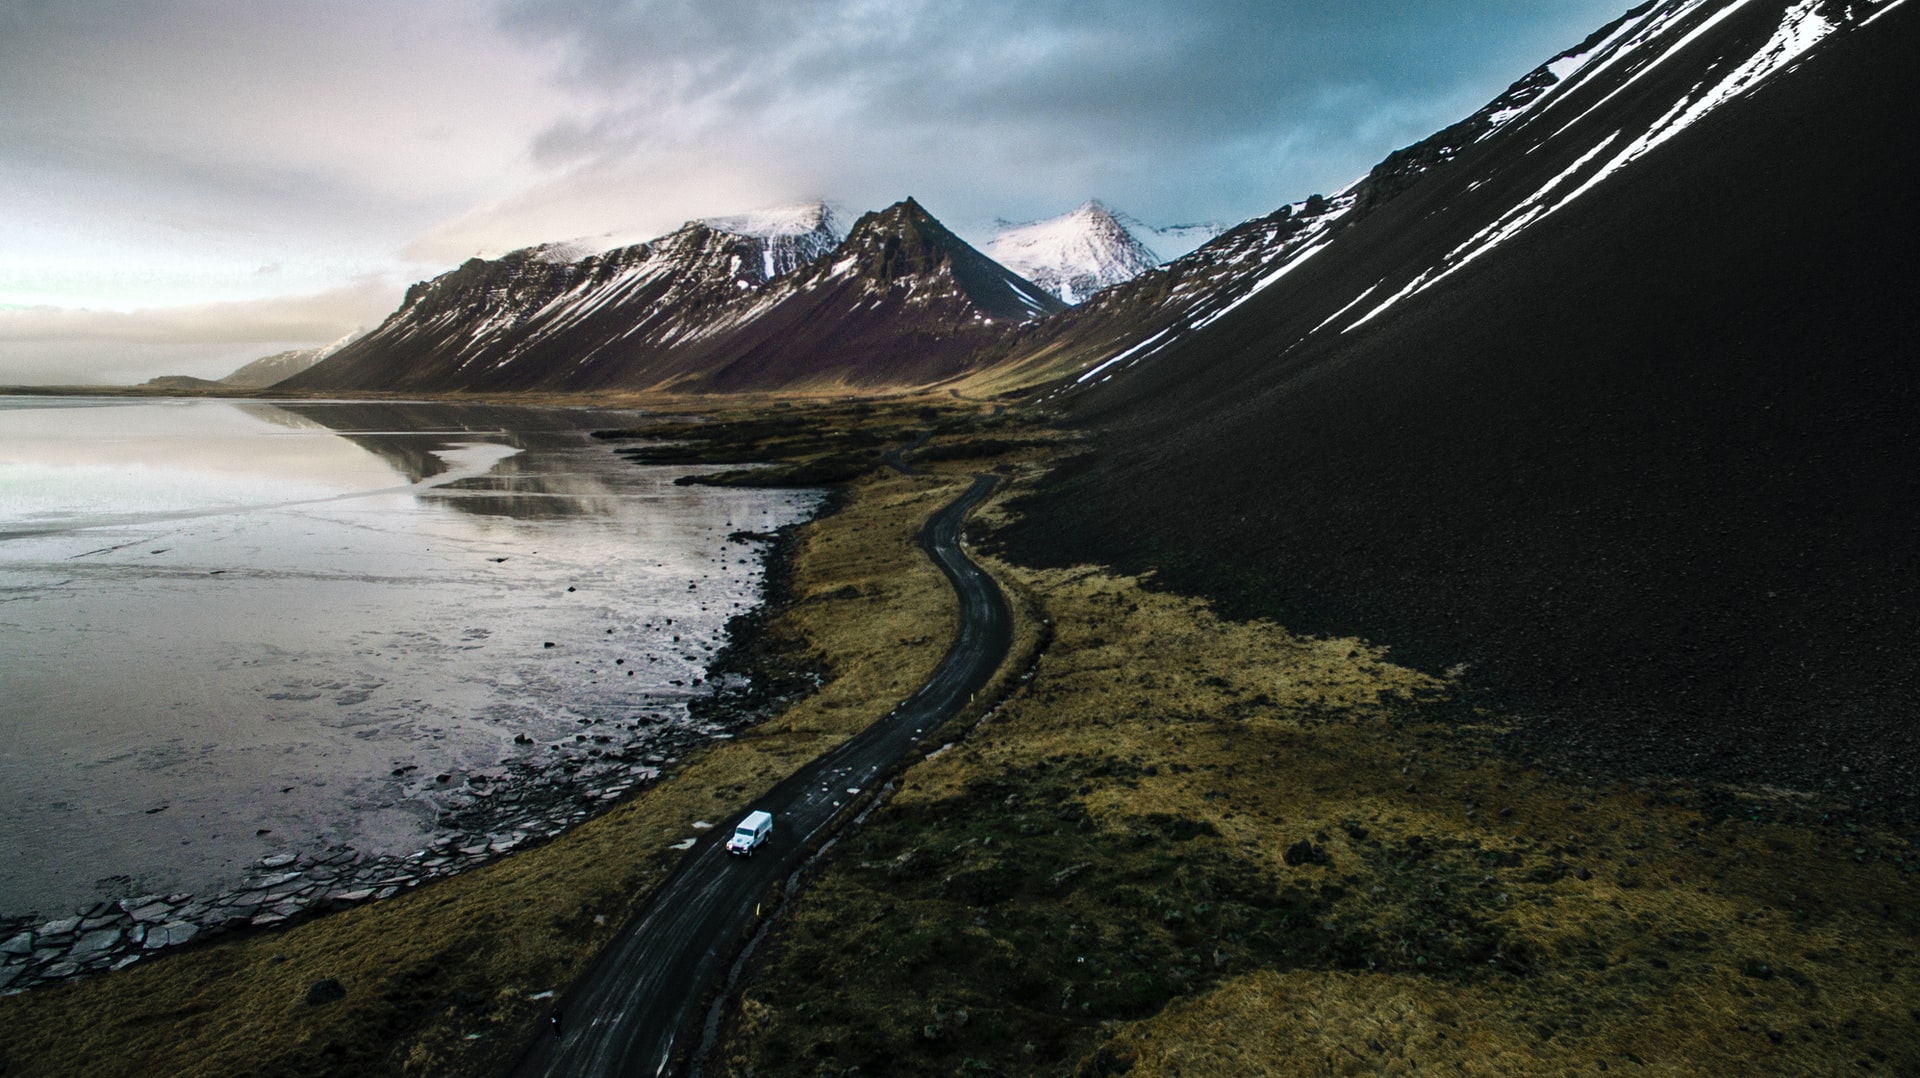 The vast Icelandic landscape